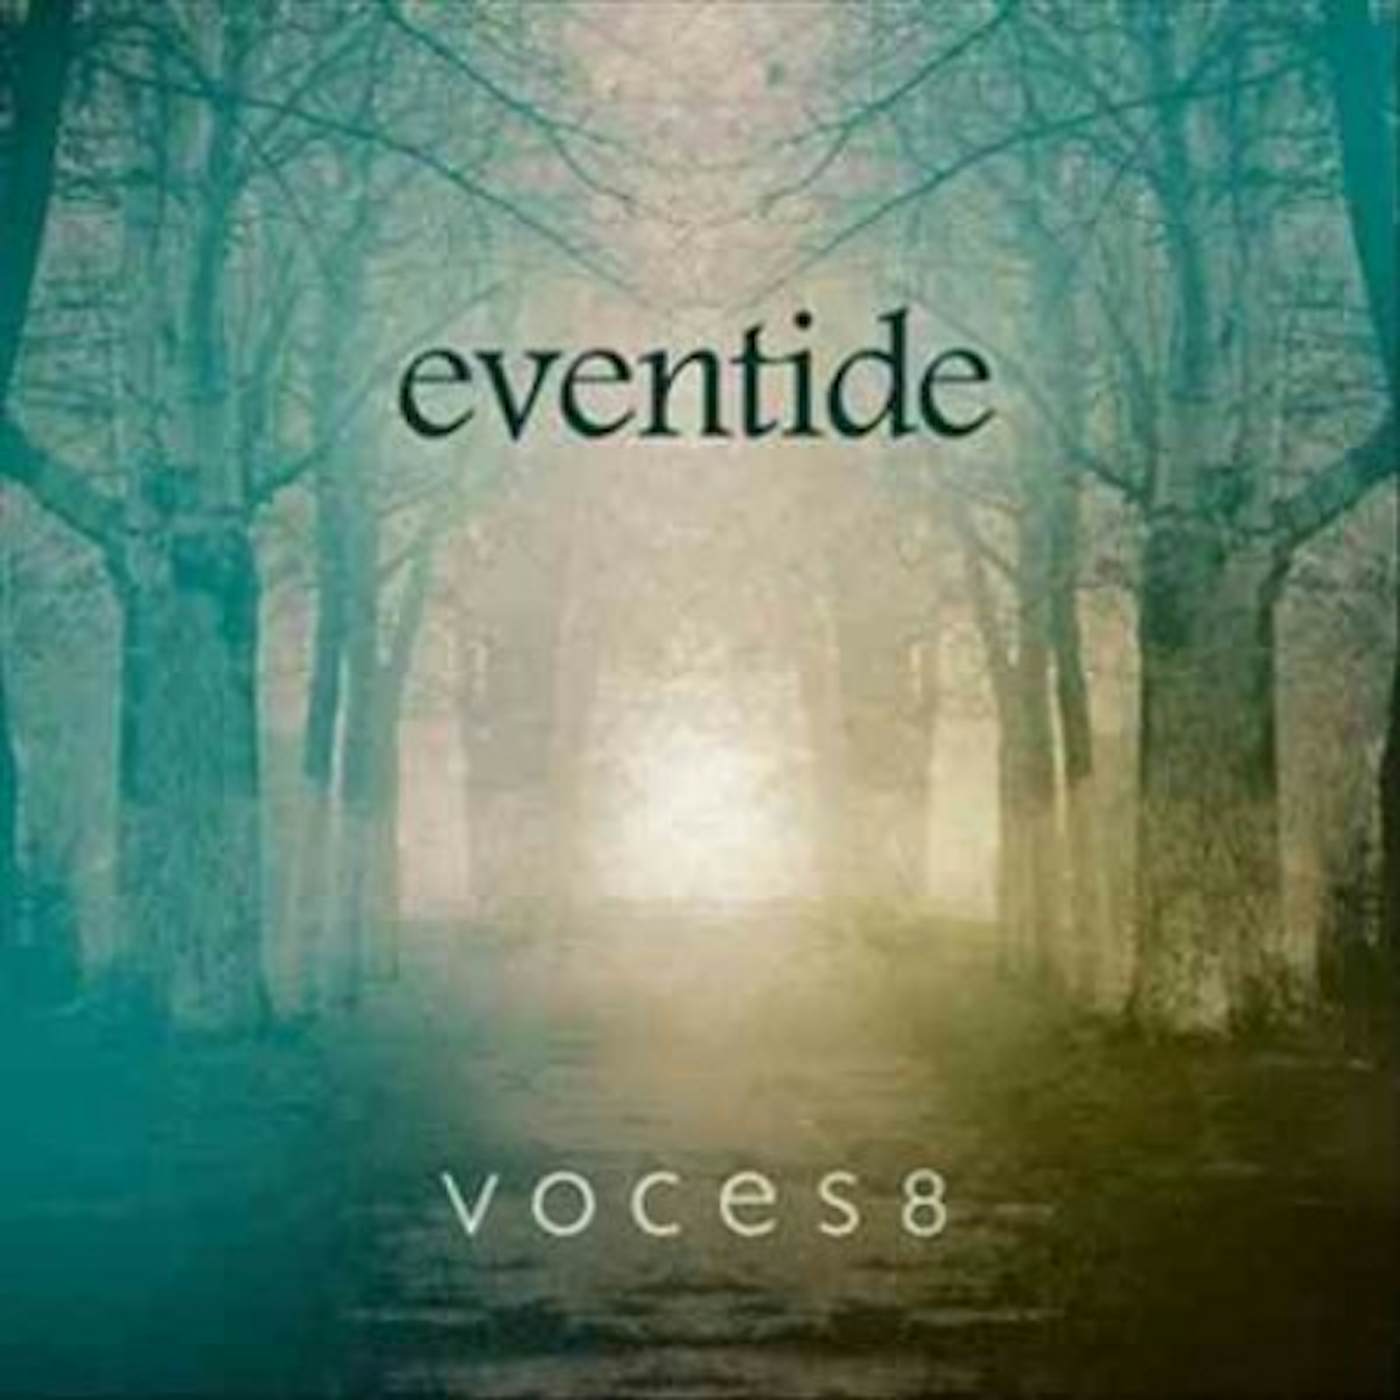 VOCES8 Eventide CD